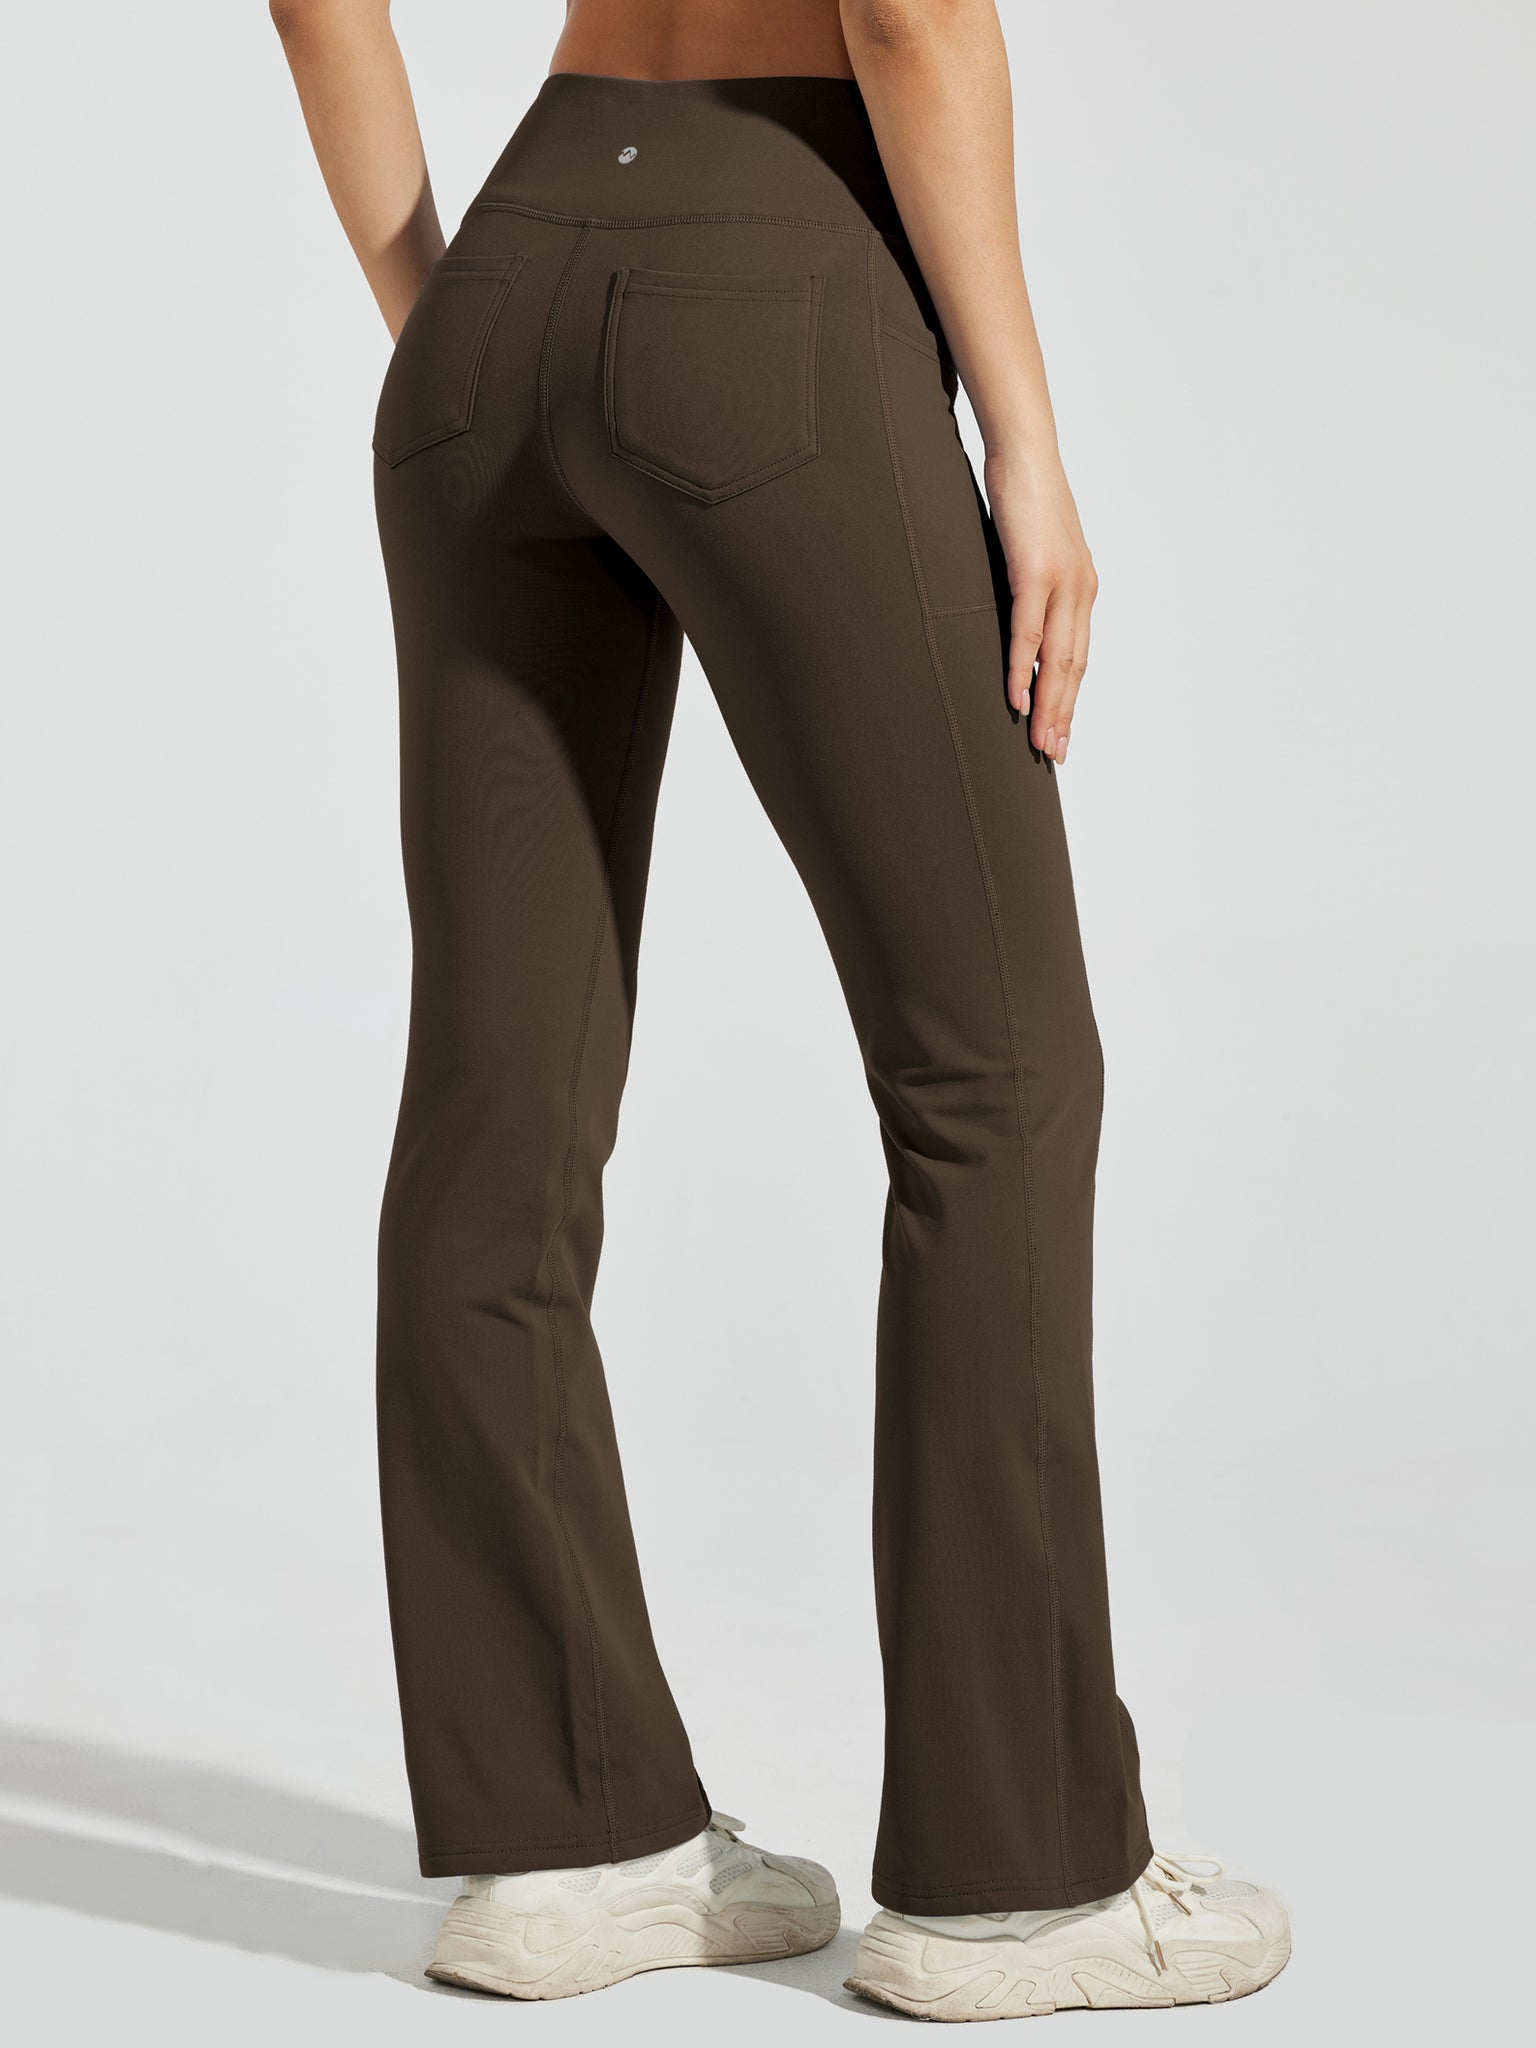 Women's Fleece Lined Bootcut Yoga Pants_Brown_model1